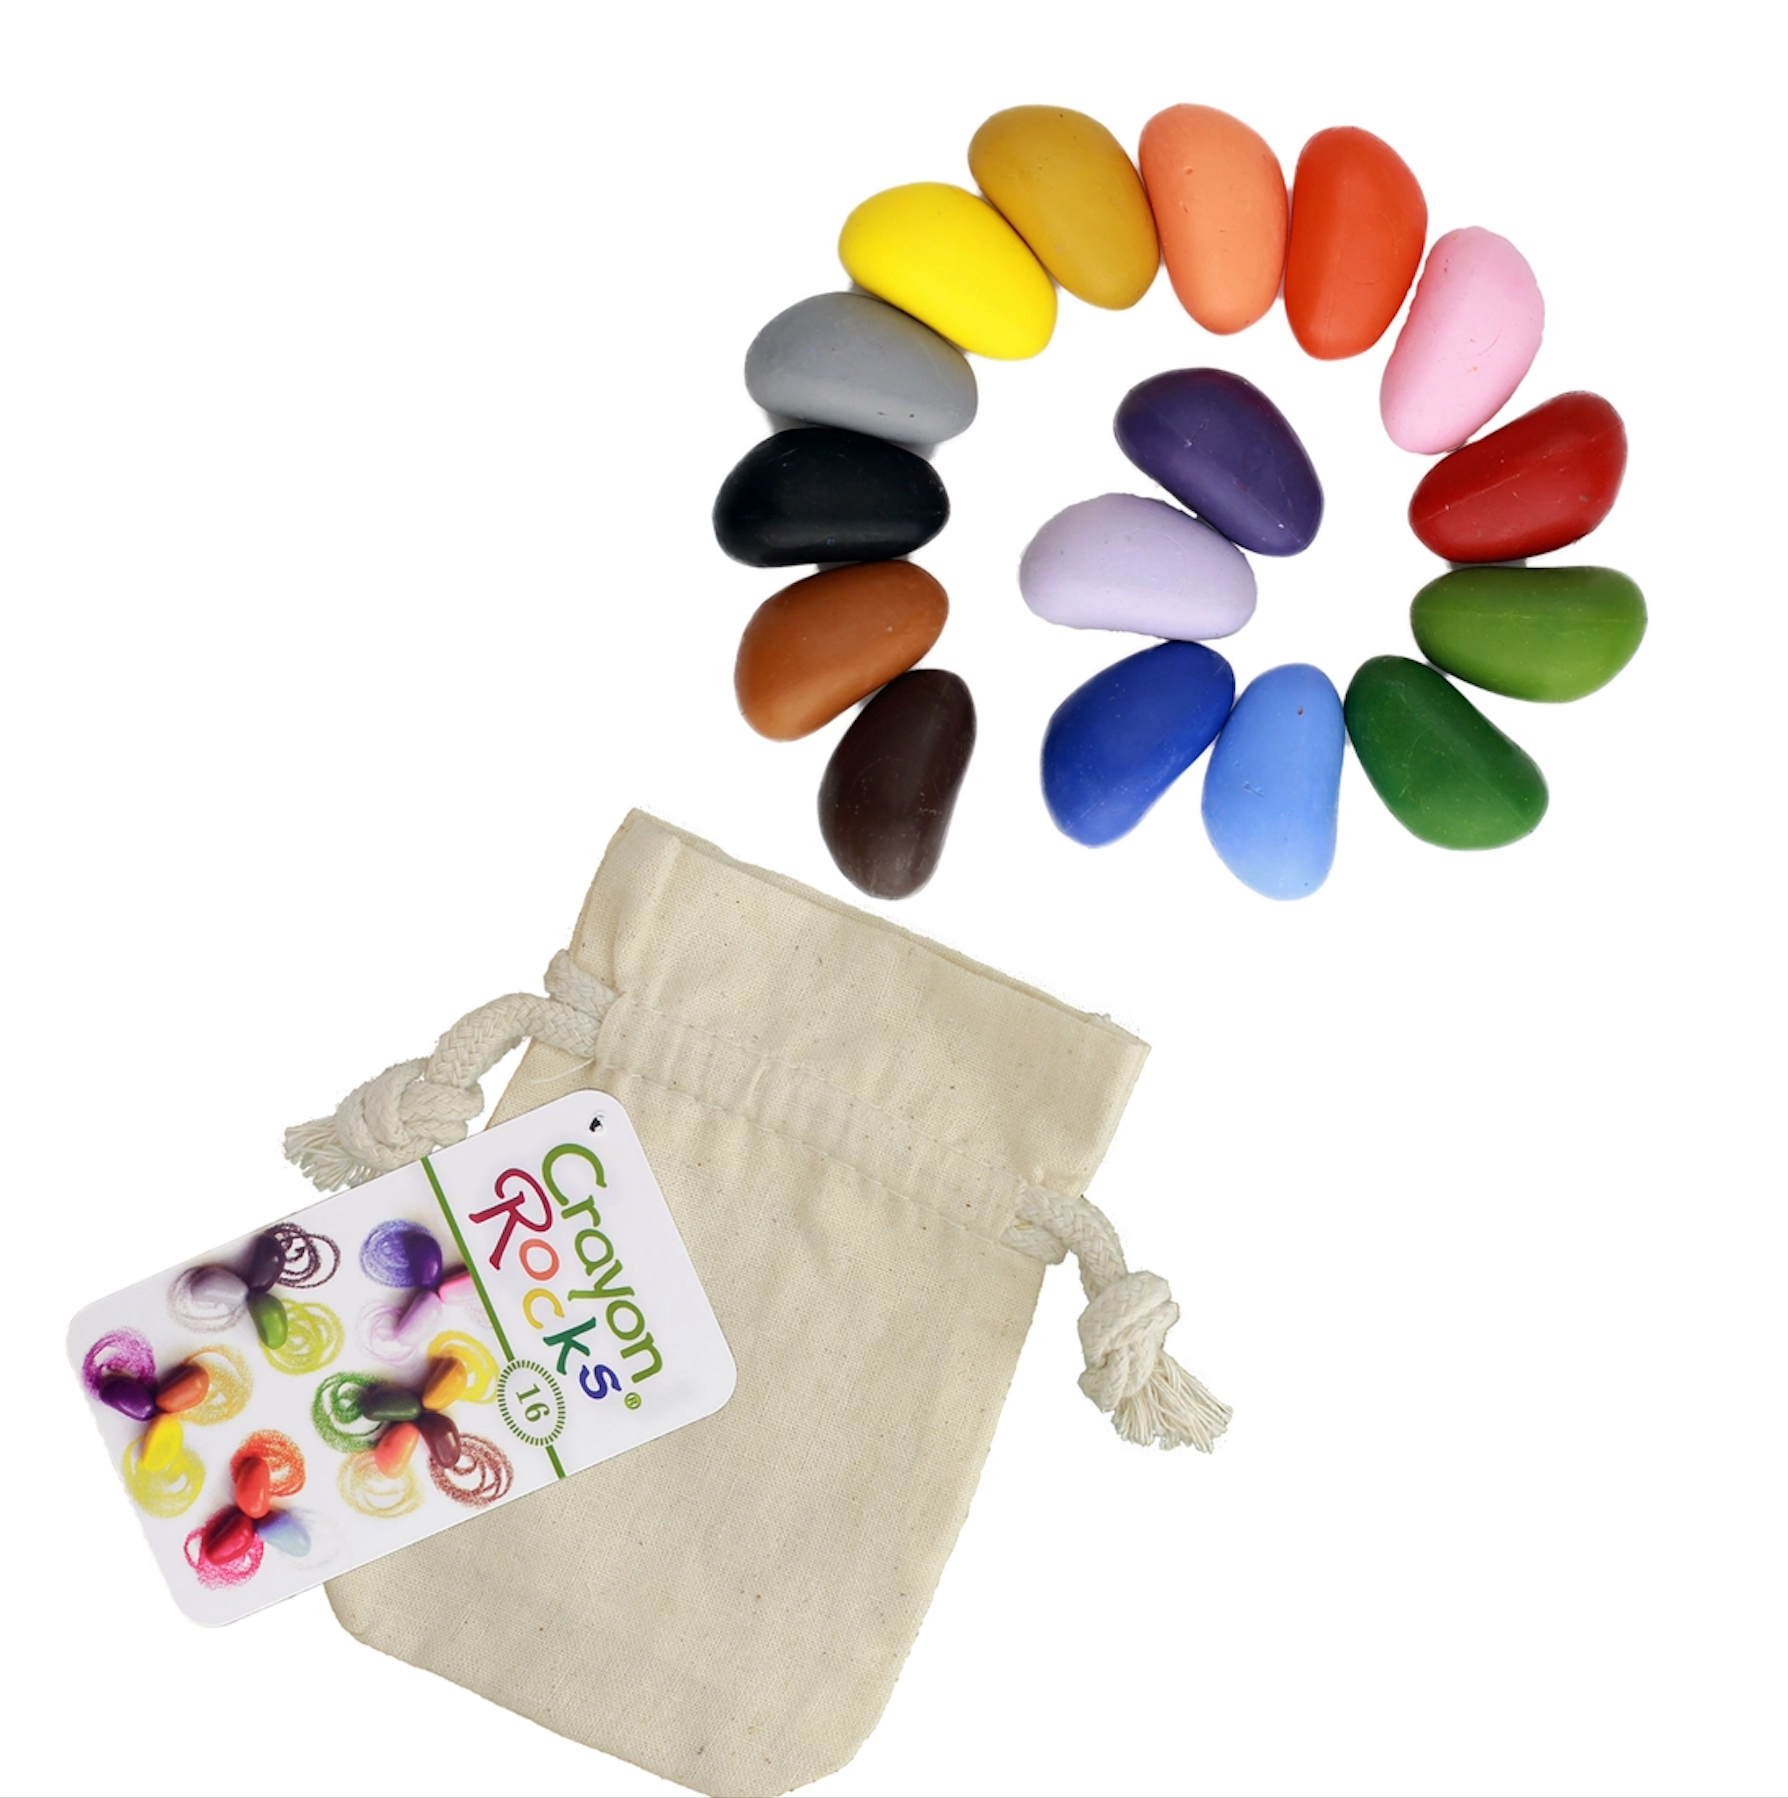 Crayon Rocks: 16 Colors in a Muslin Bag